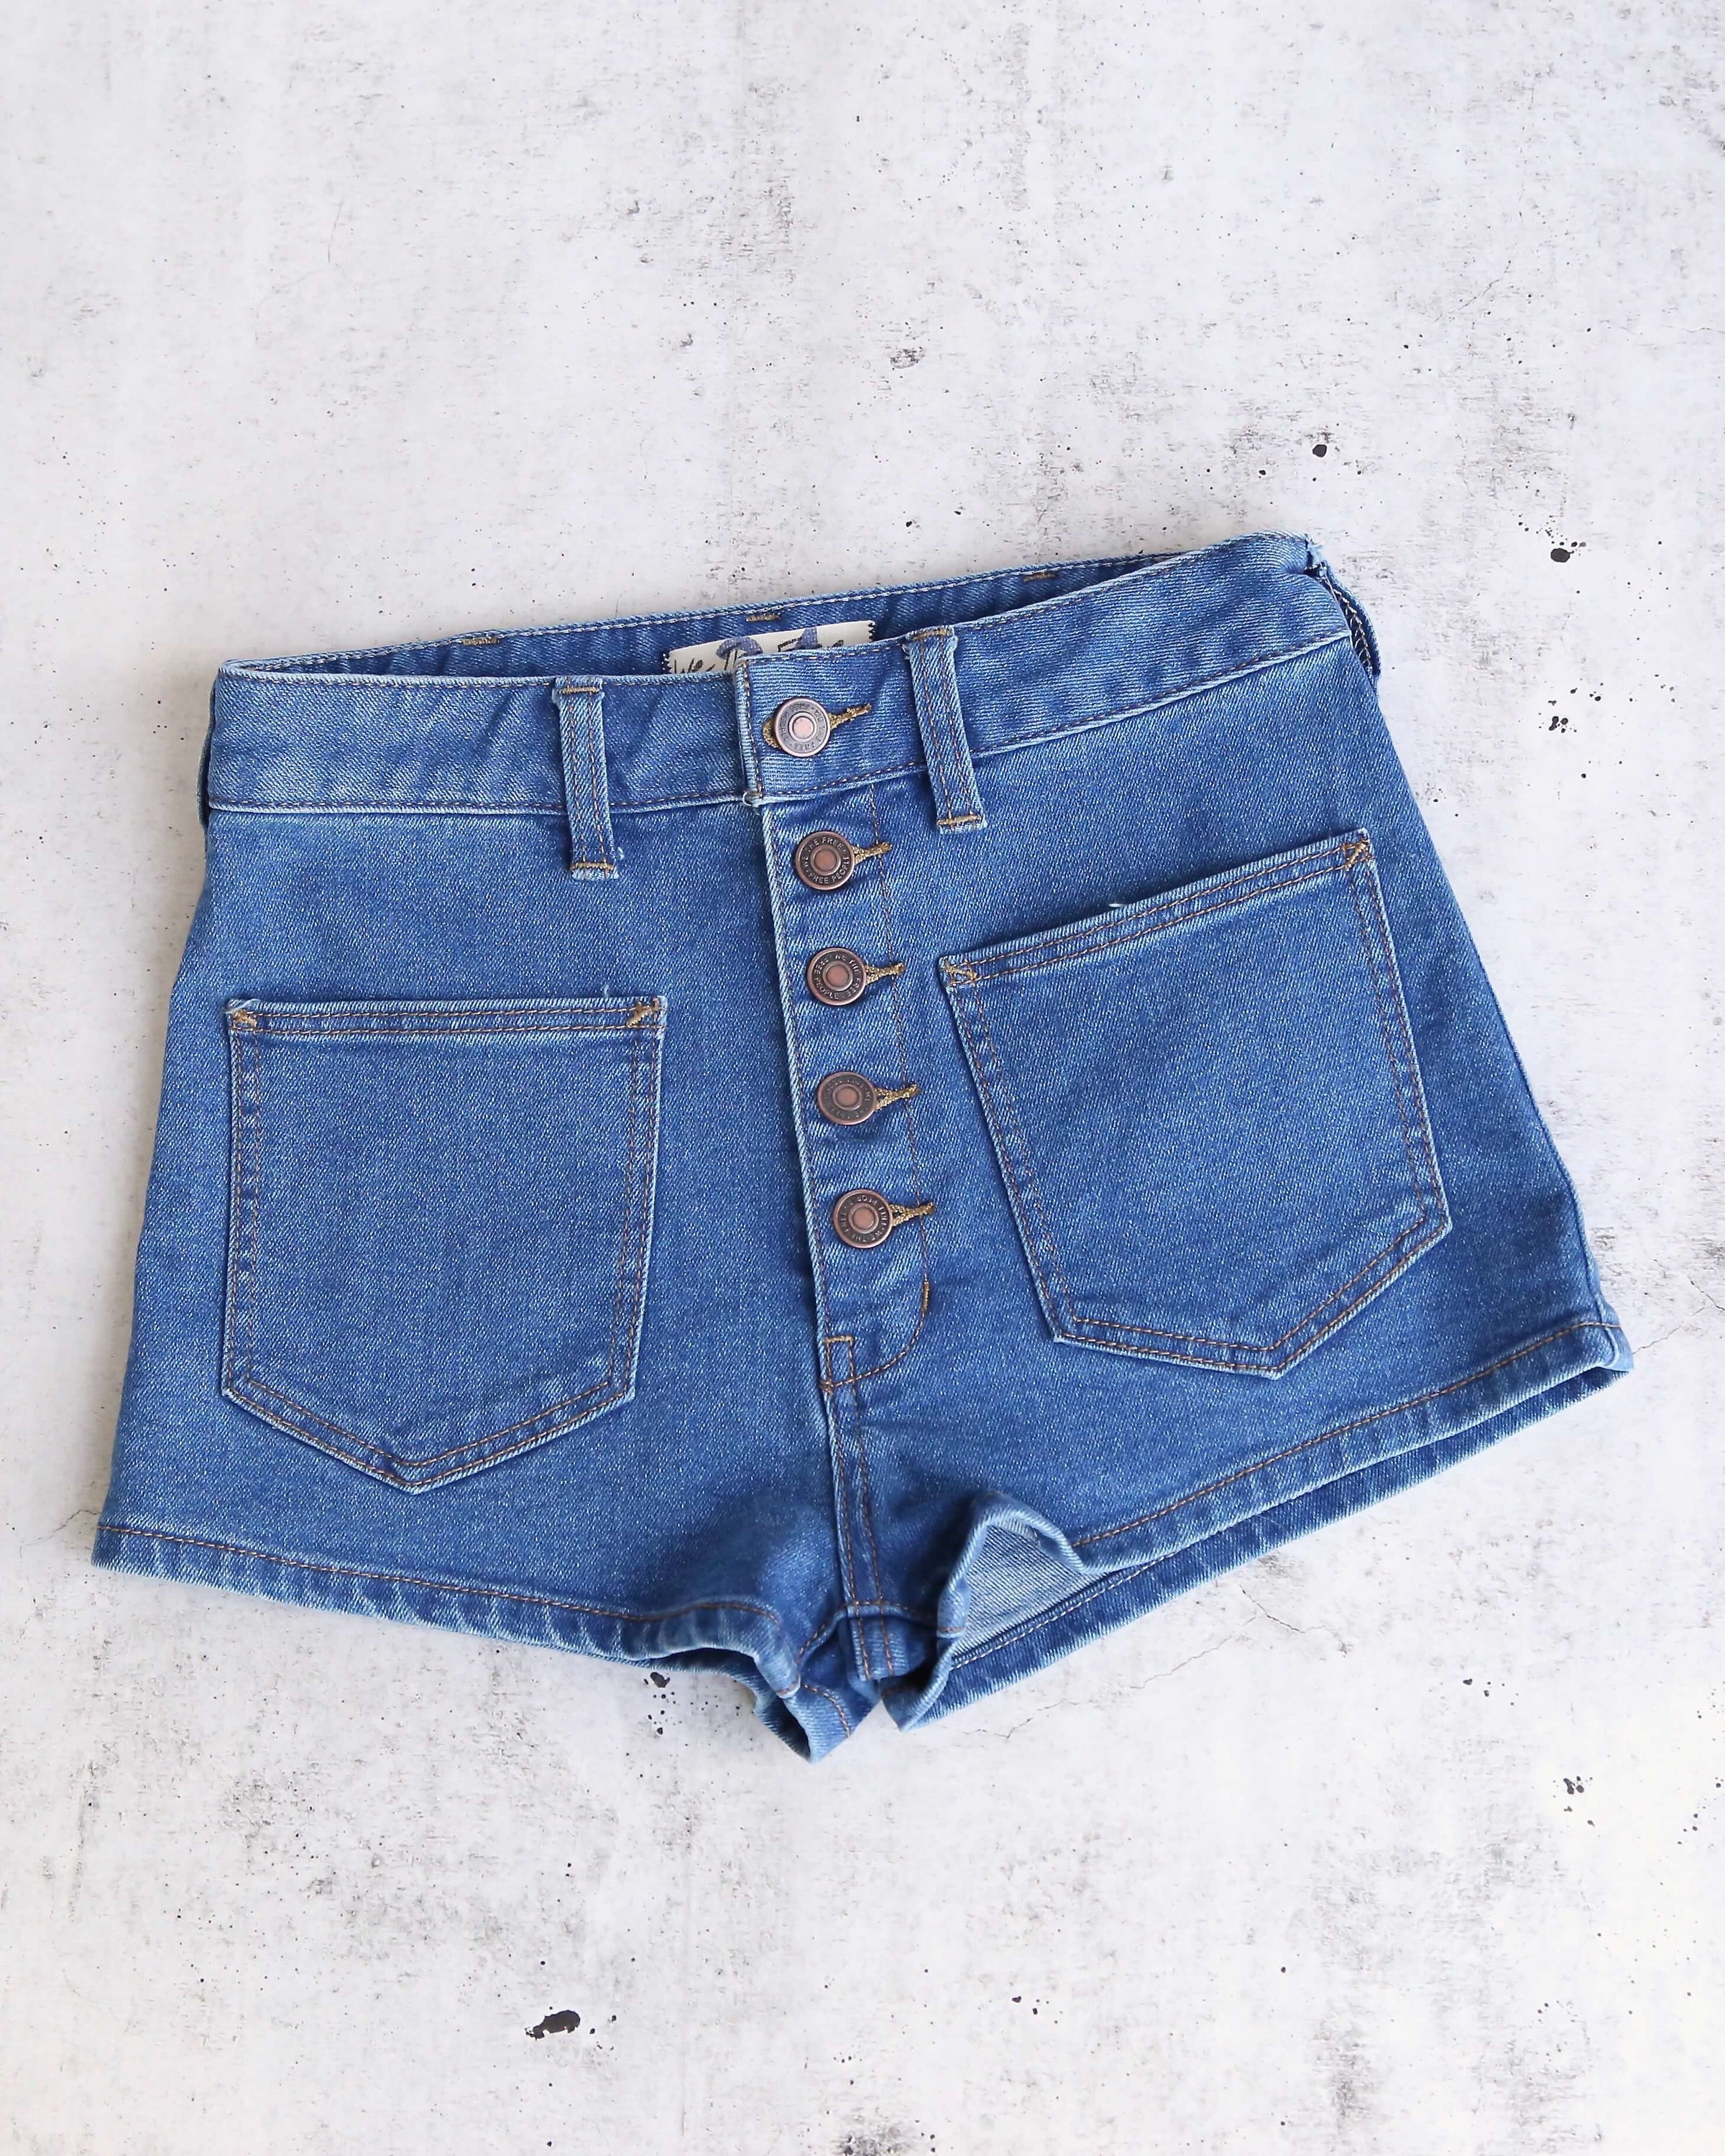 blue jean short shorts